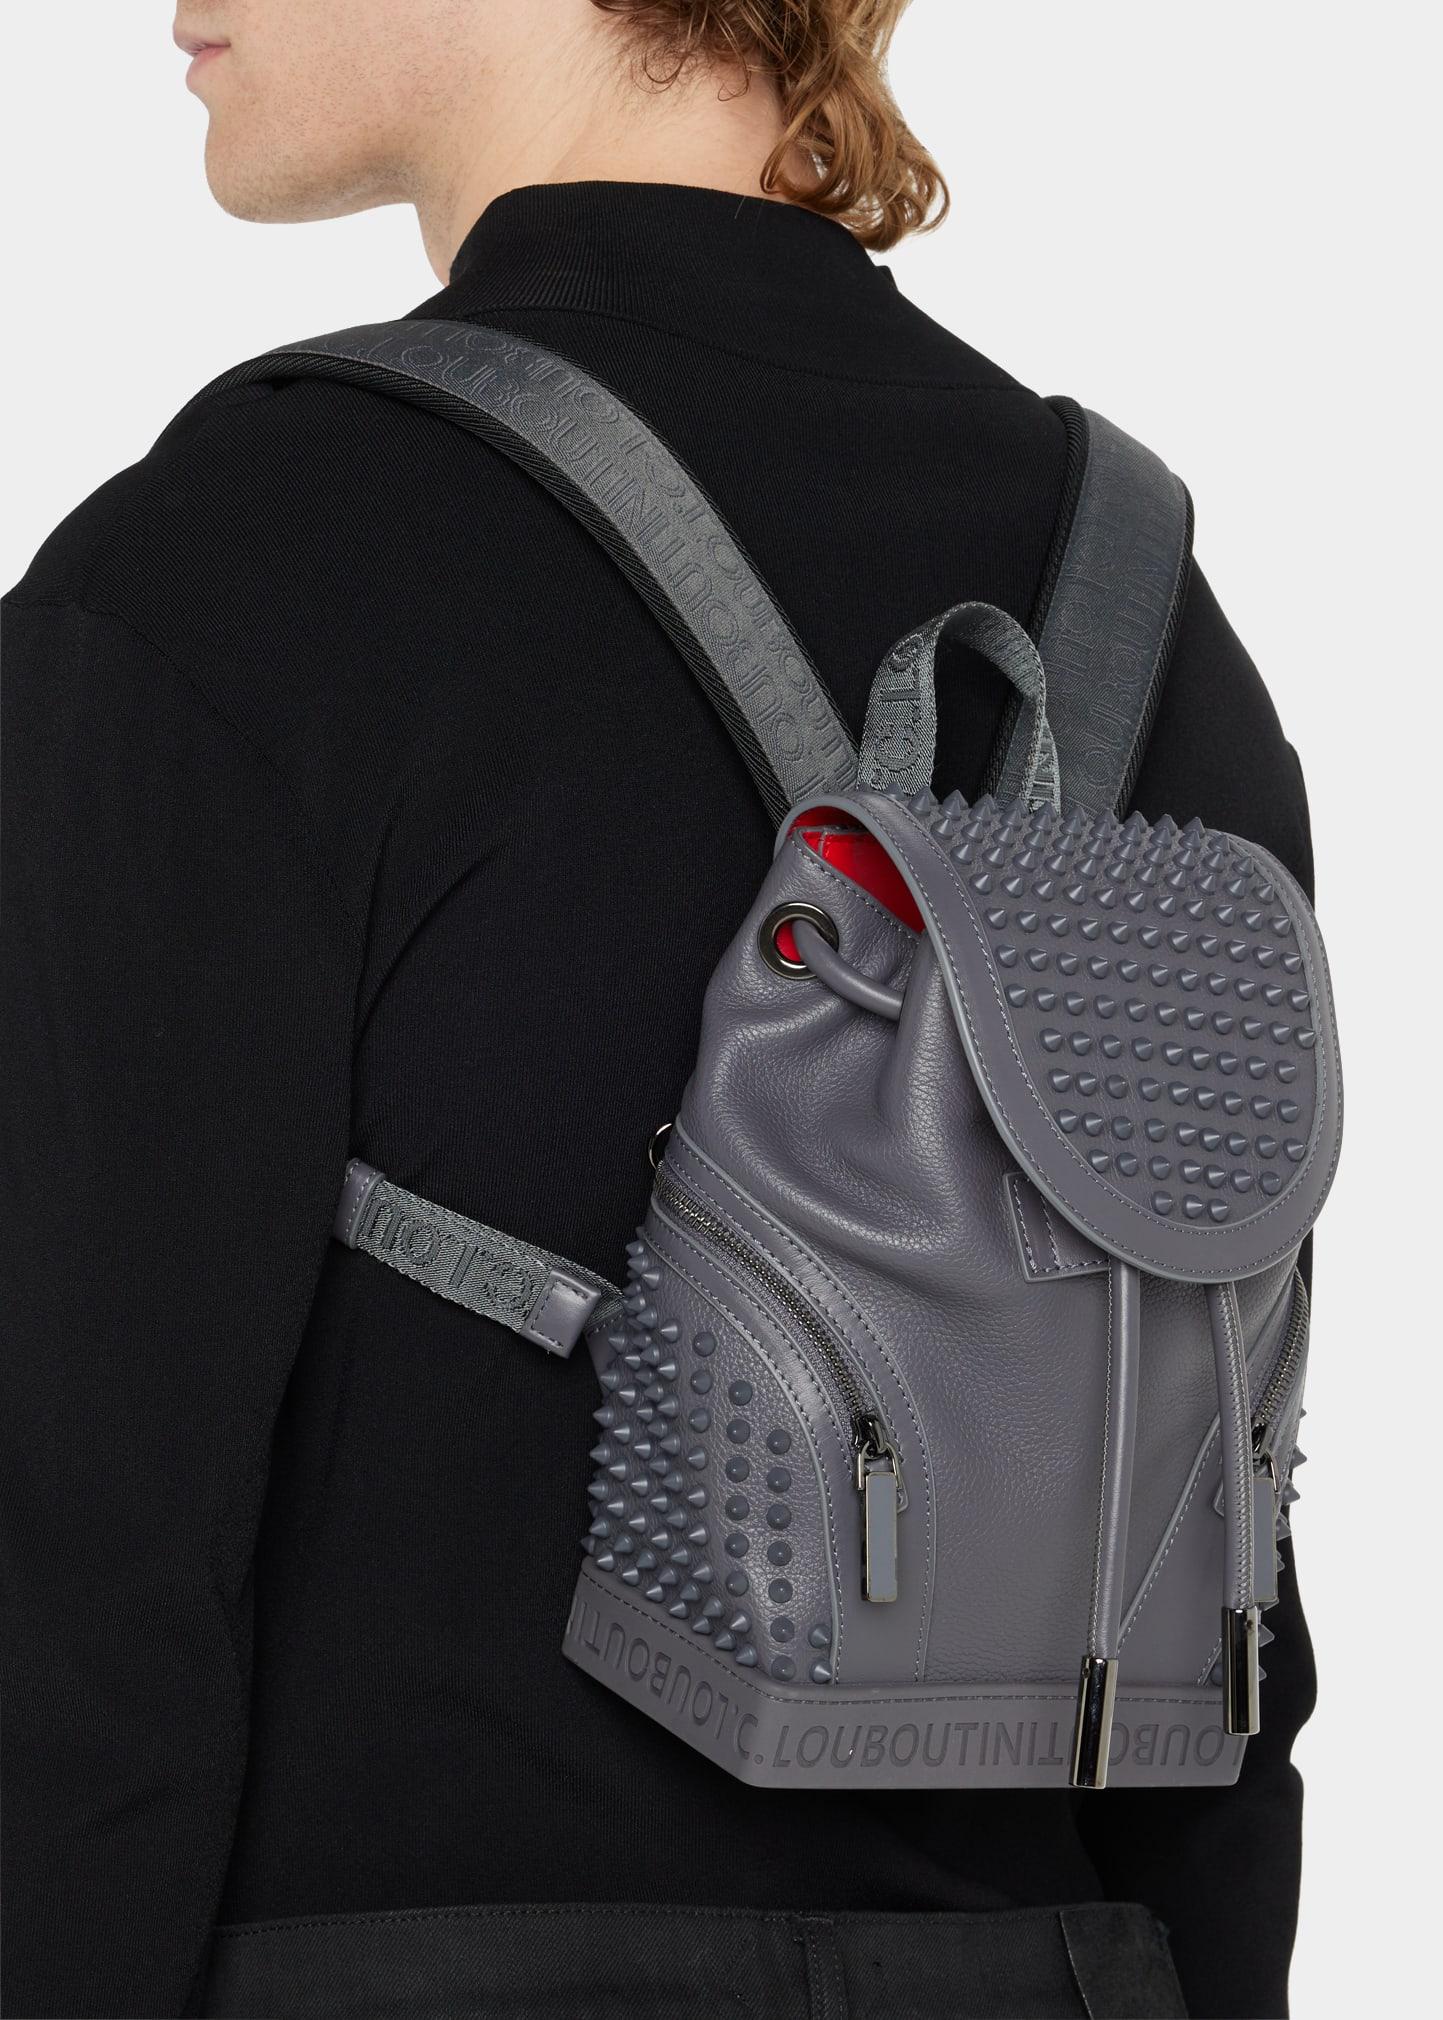 Christian Louboutin Explorafunk Spikes Leather Cross-body Bag in